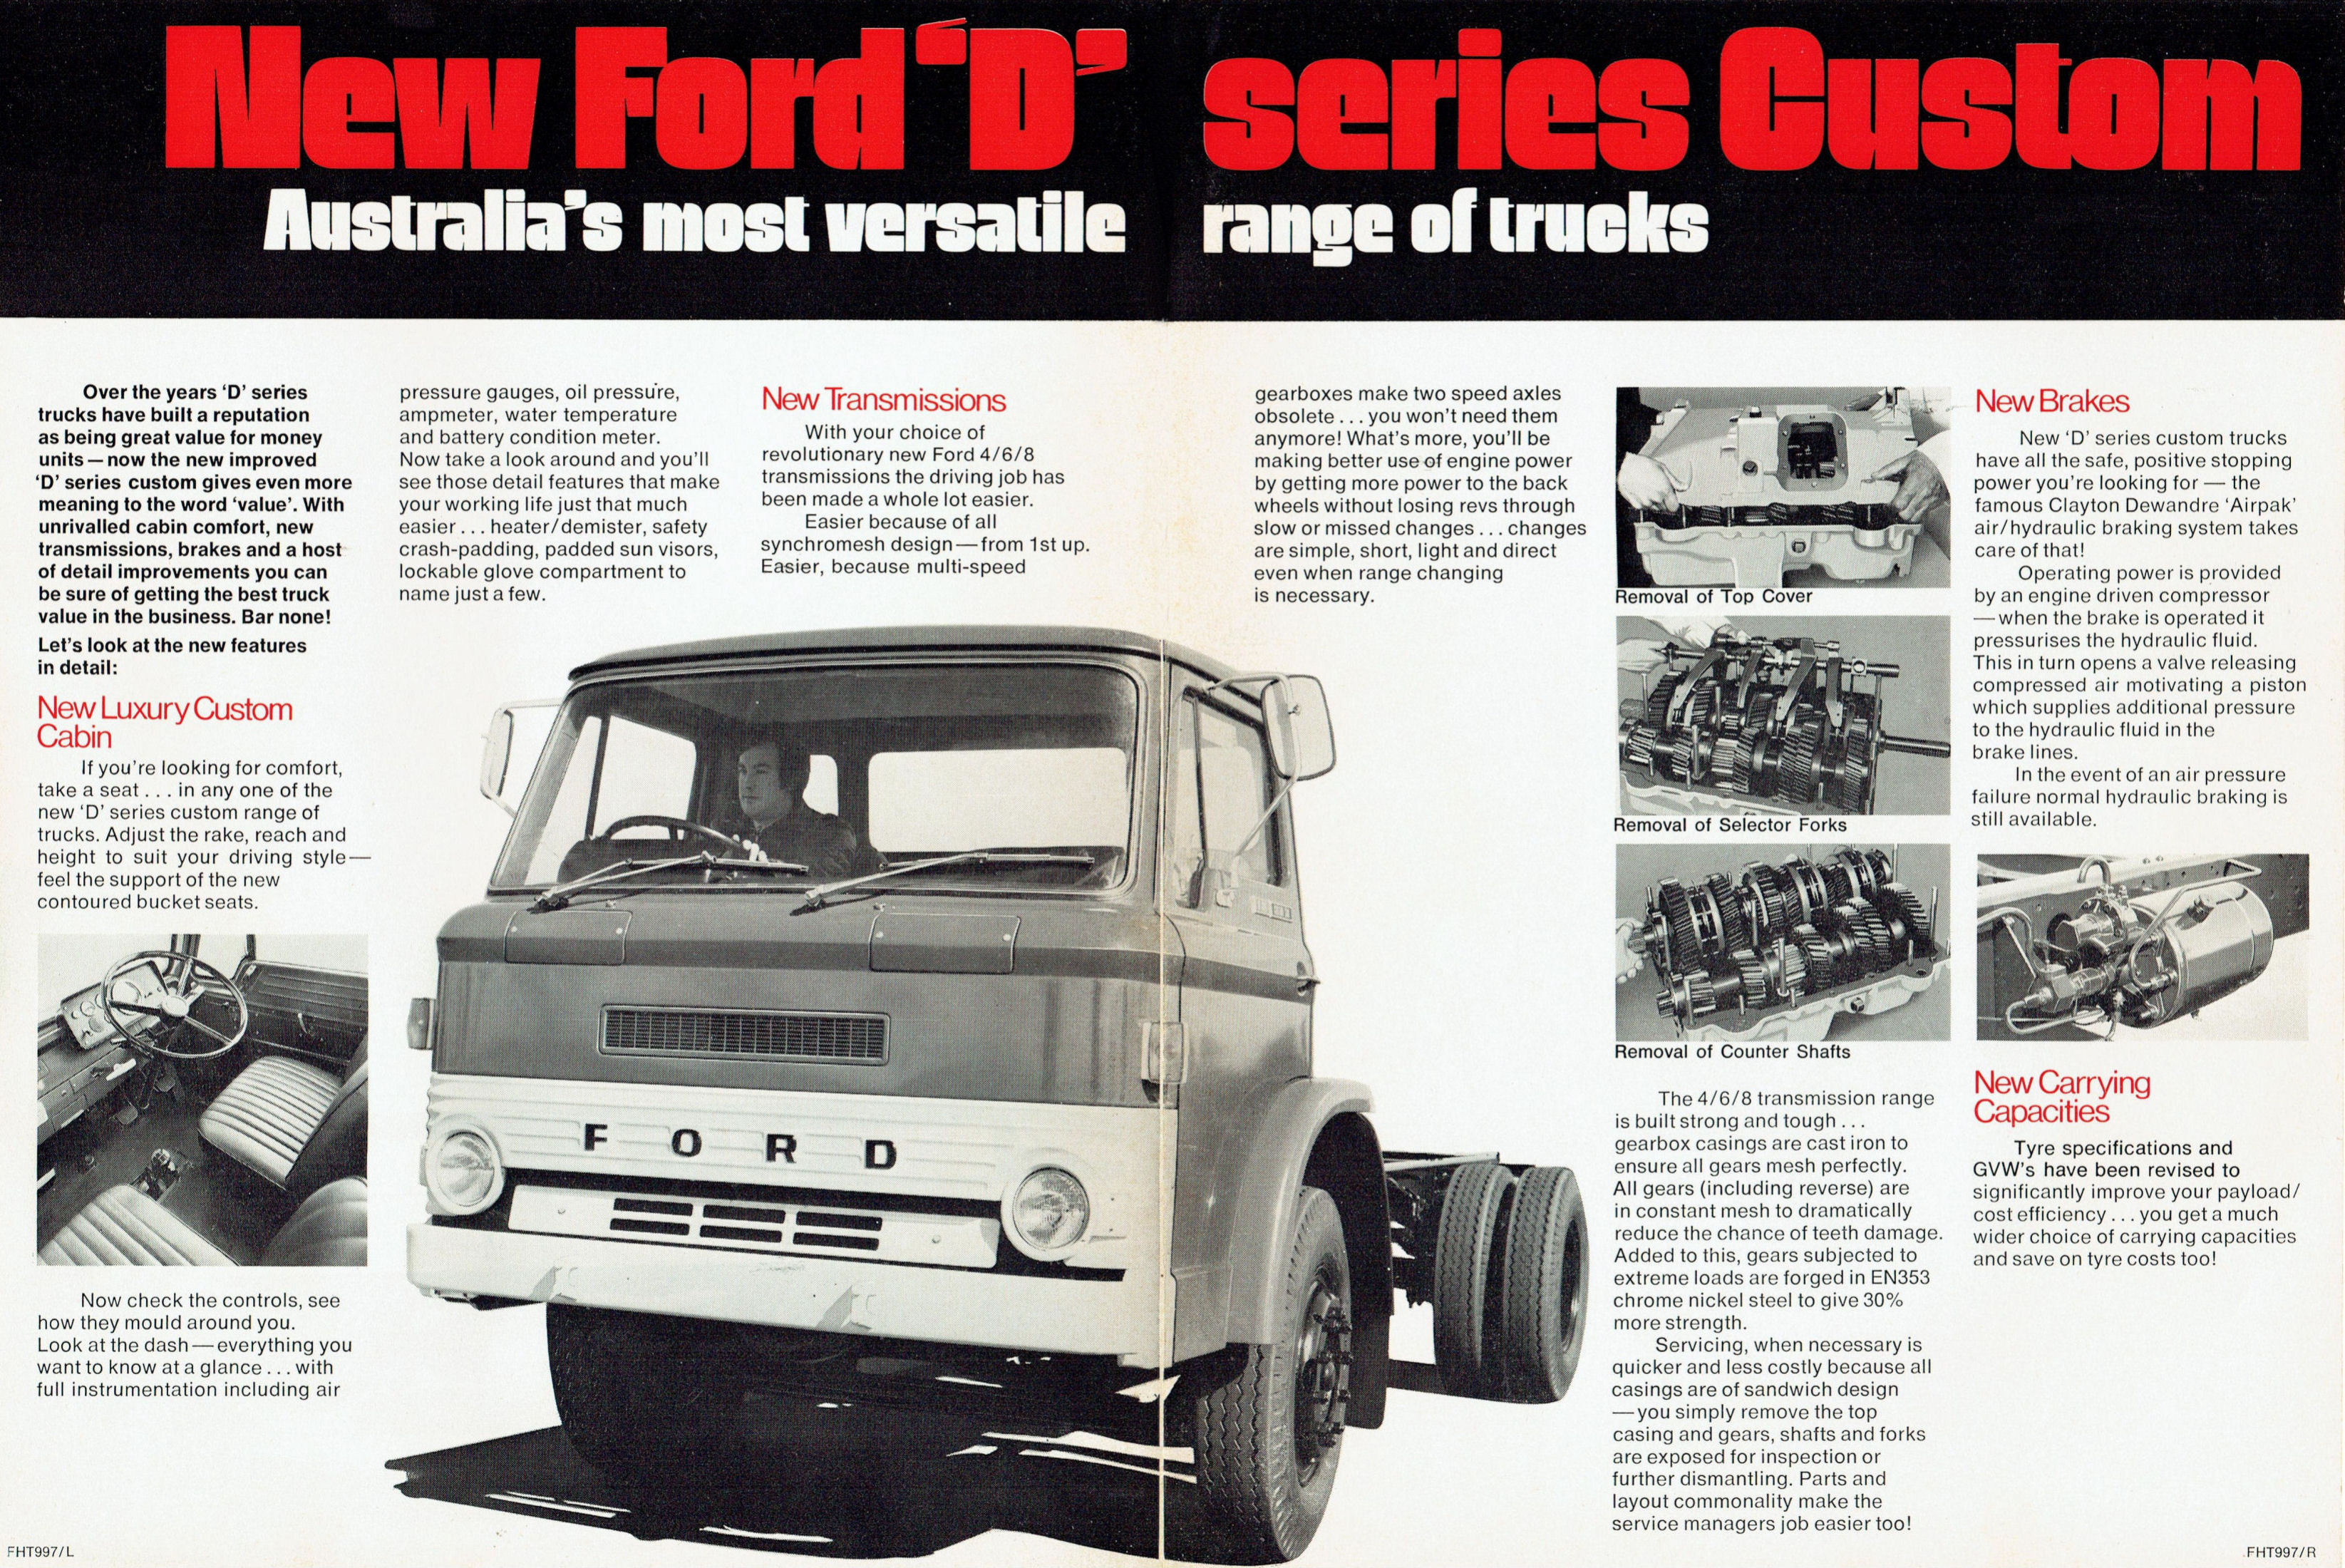 1967 Ford D Series Custom Trucks (Aus)-02-03.jpg-2022-12-7 13.22.40